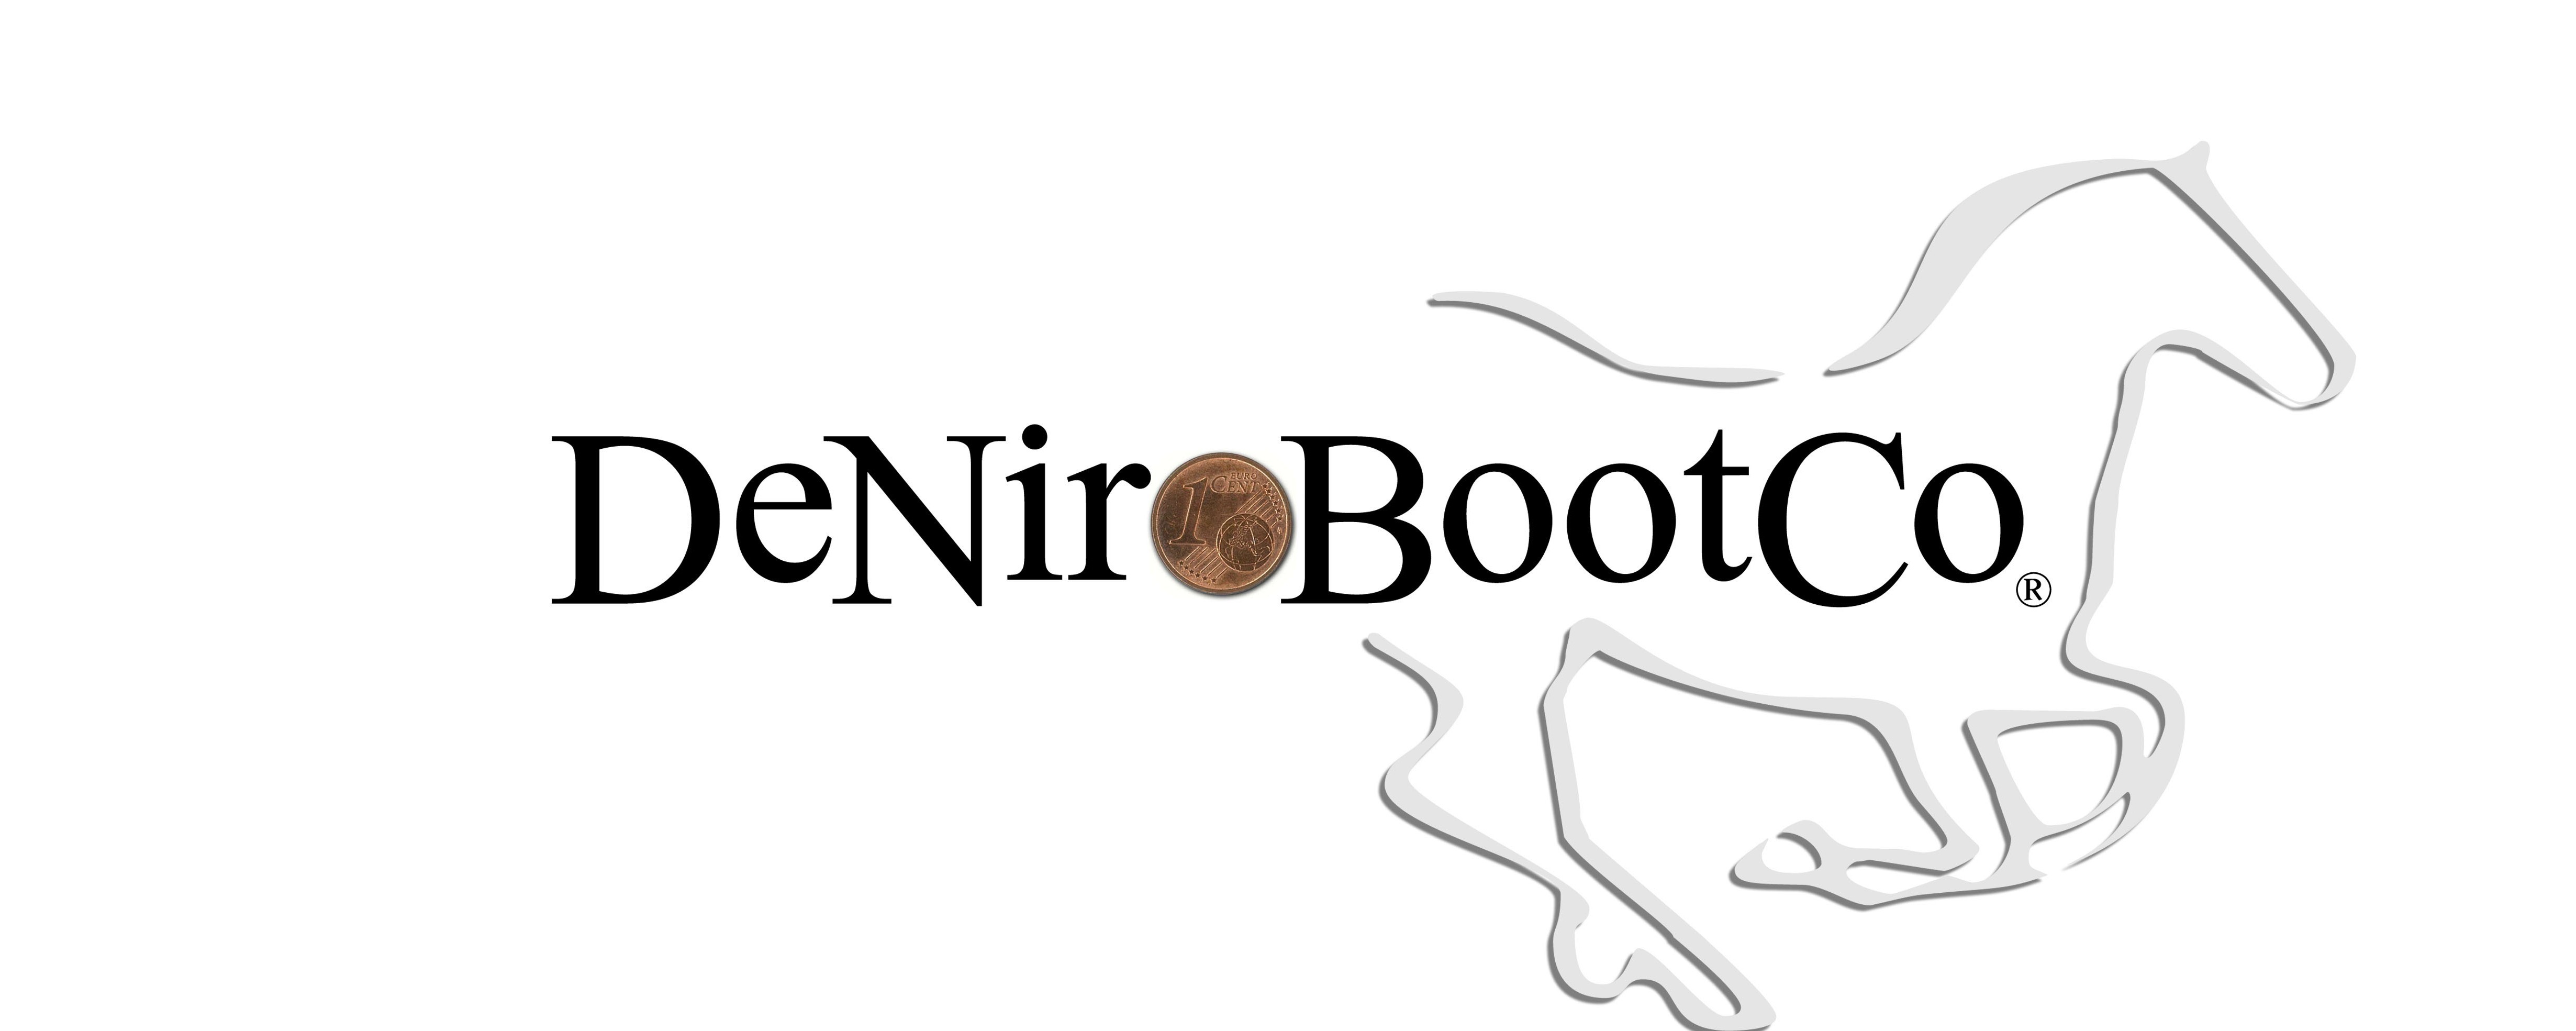 De Niro Boot Co.